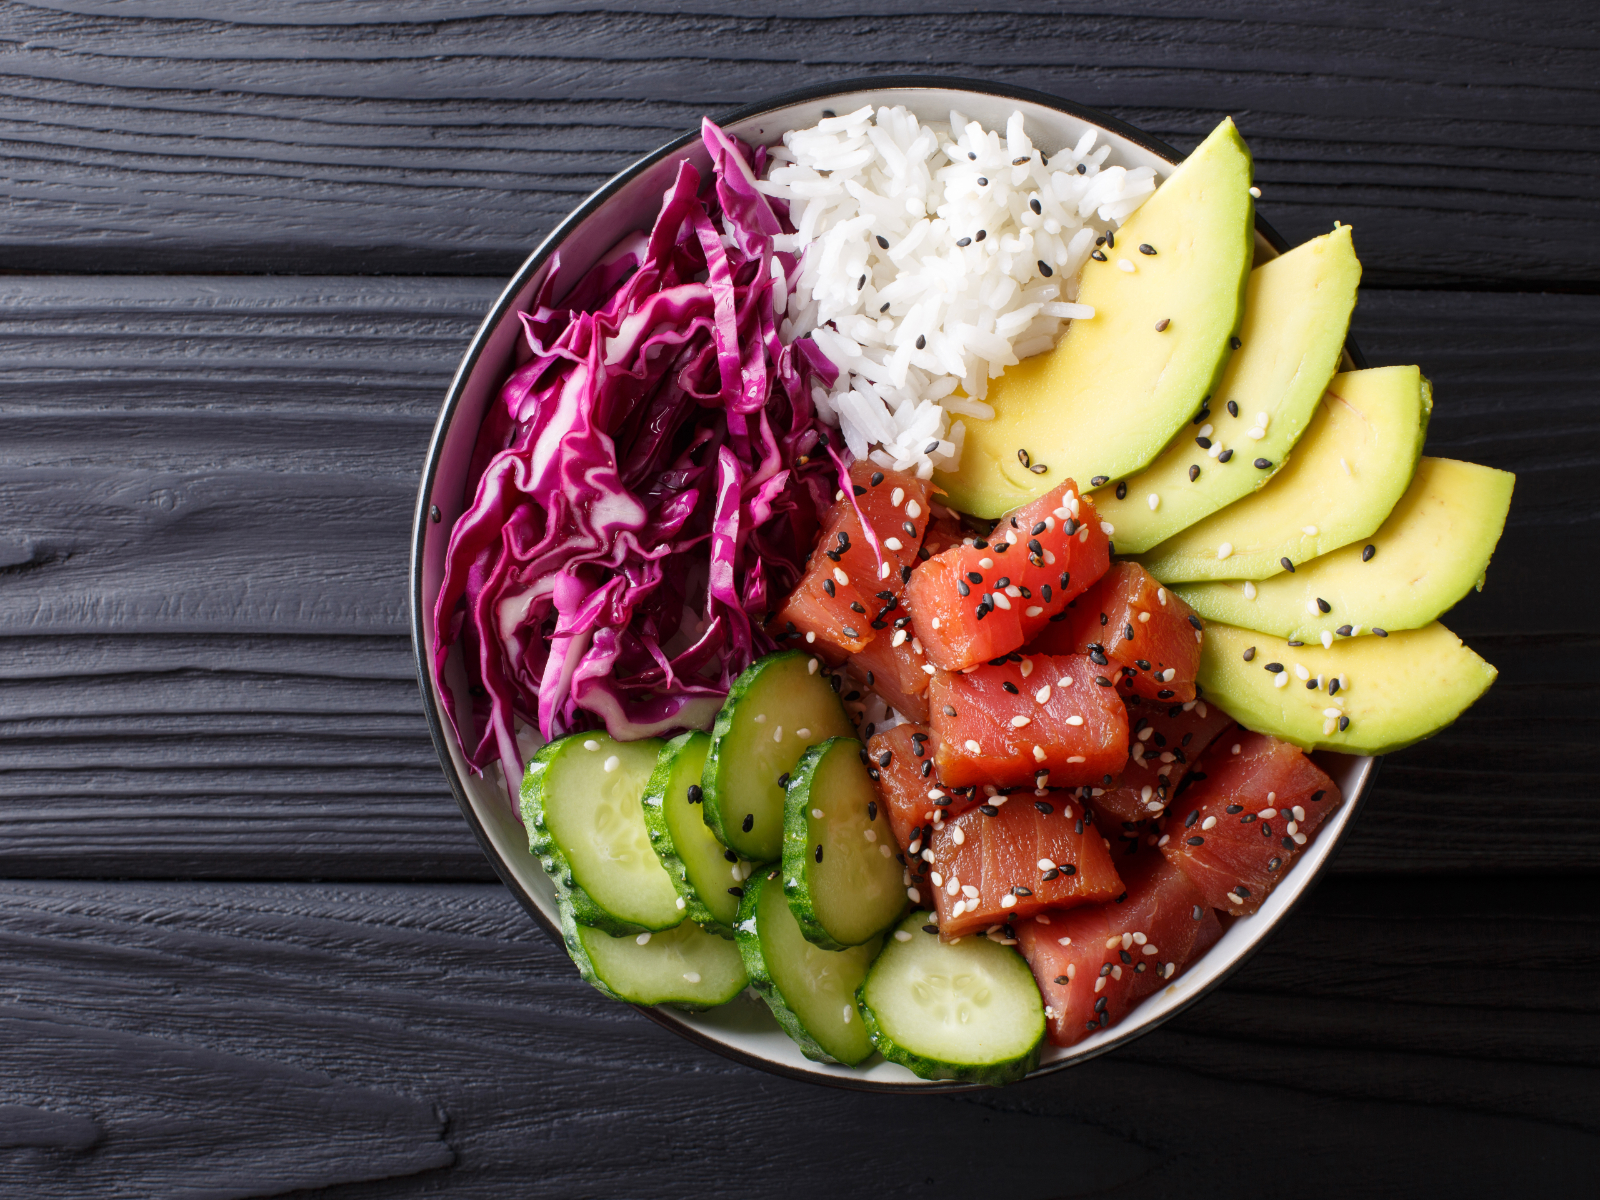 tuna poke bowl with veggies and rice